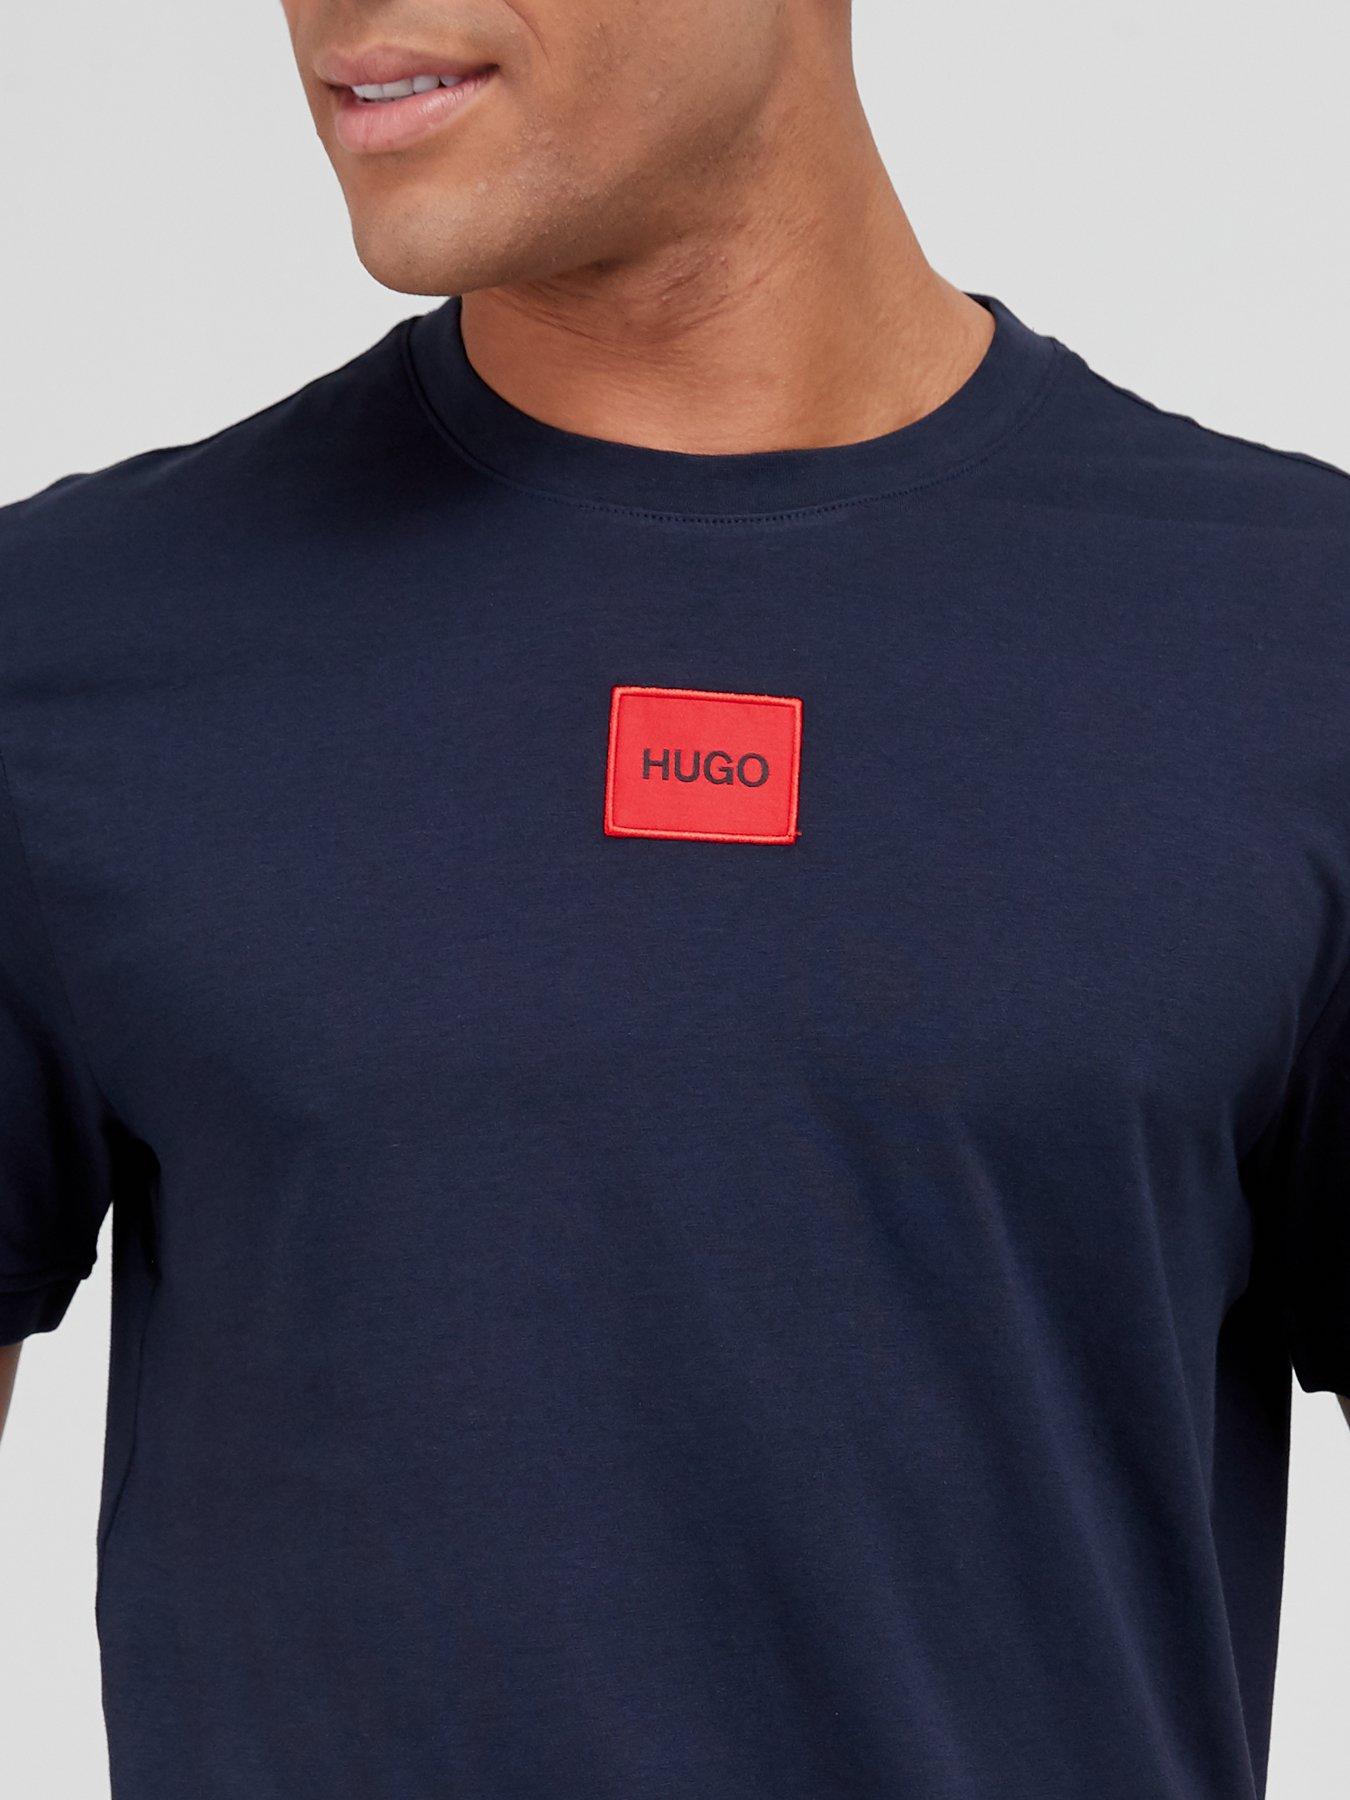  Diragolino Red Patch Logo T-Shirt - Dark Blue